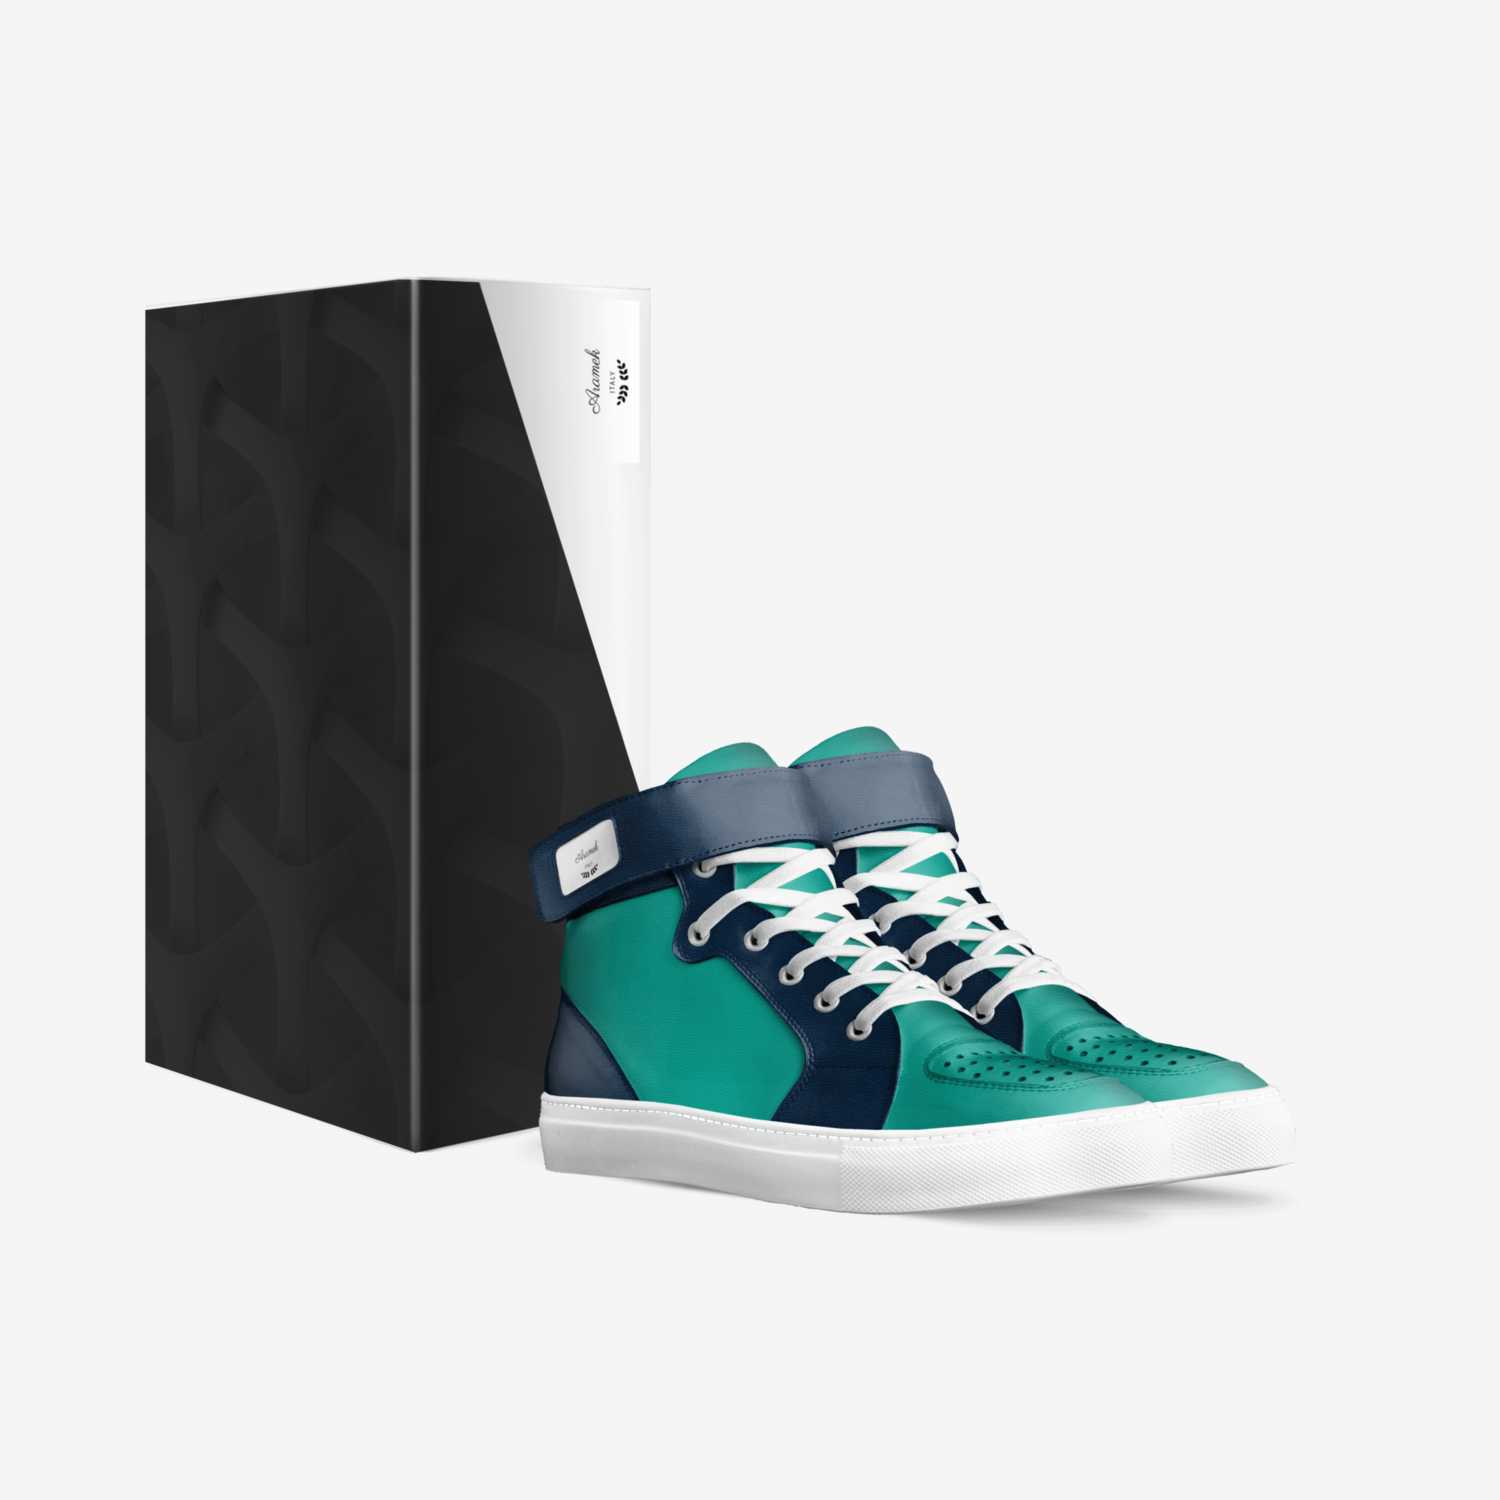 Aramek custom made in Italy shoes by Rebecca Black | Box view